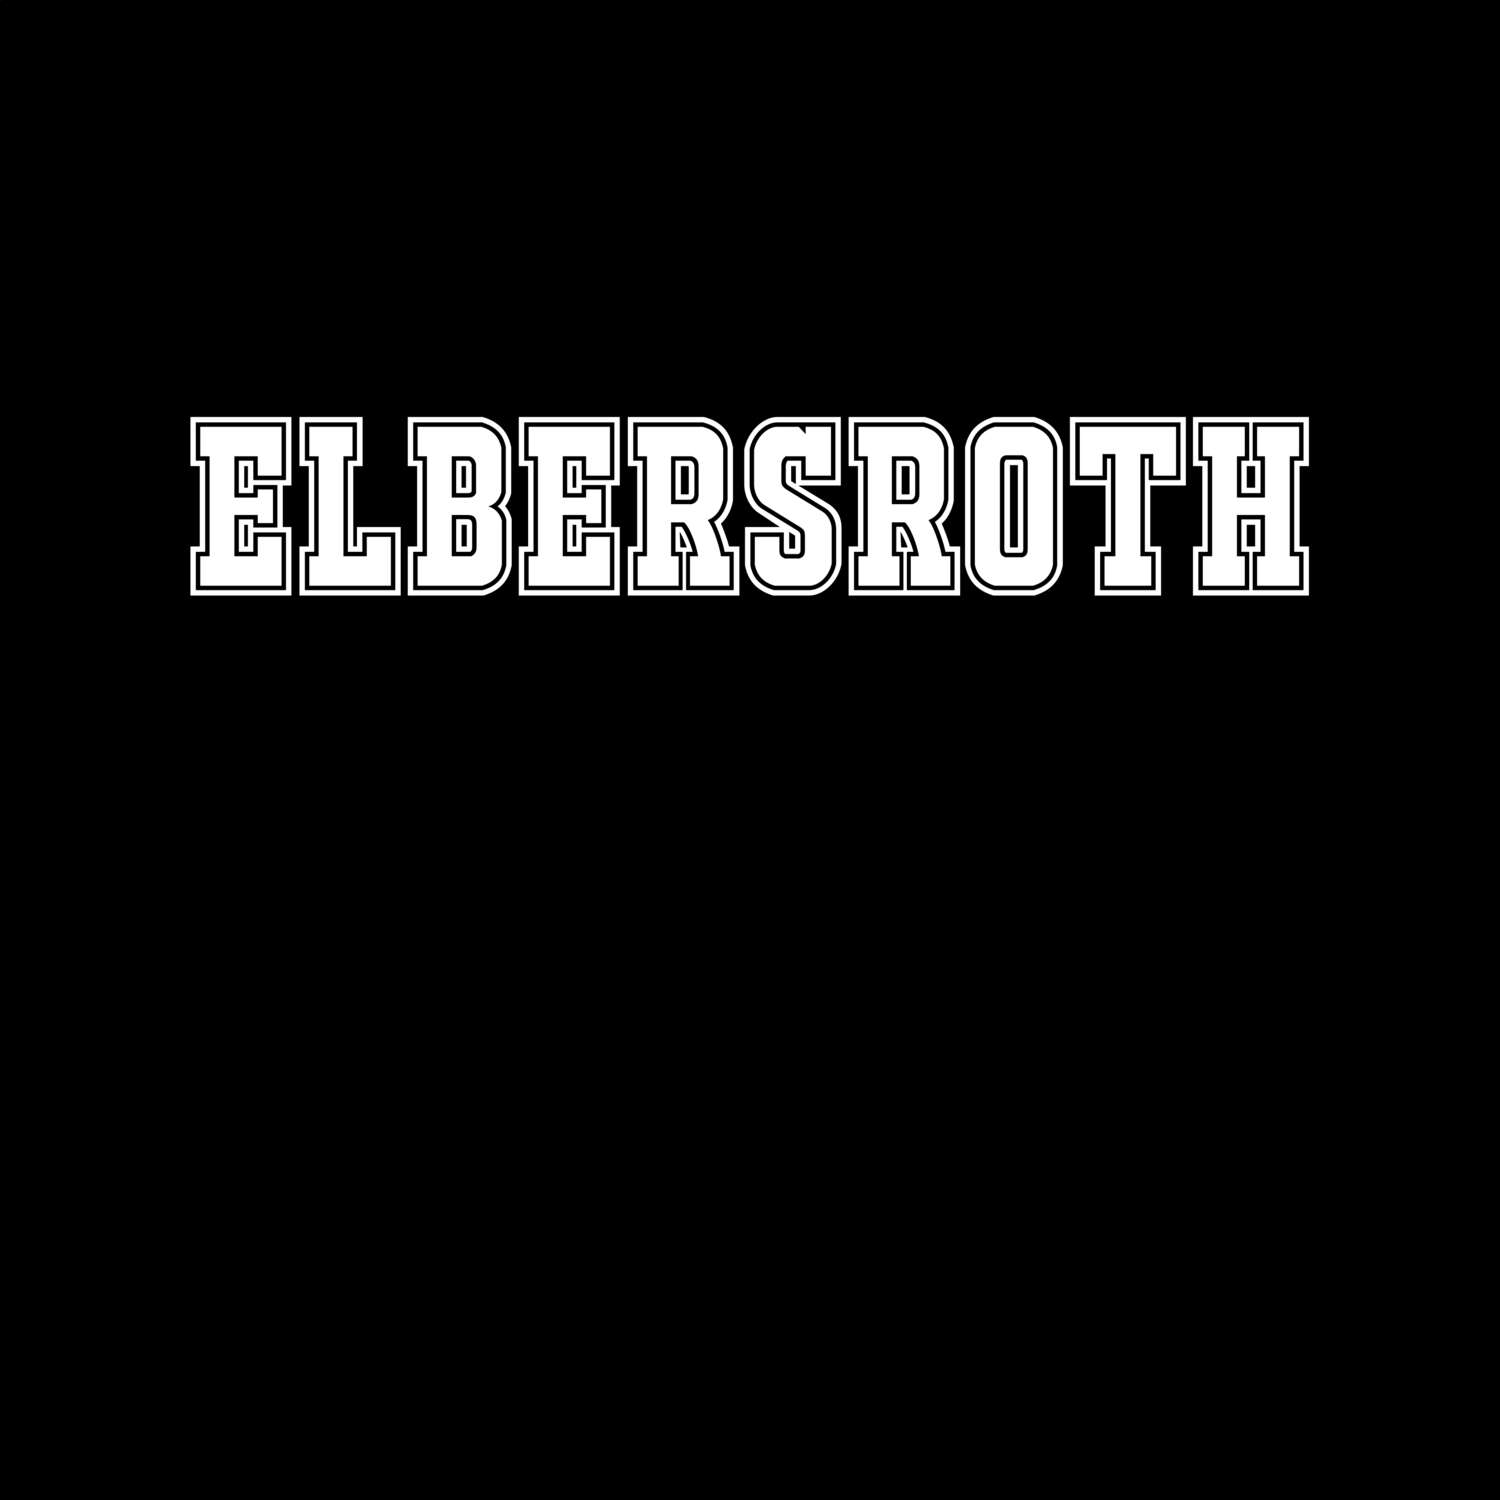 Elbersroth T-Shirt »Classic«